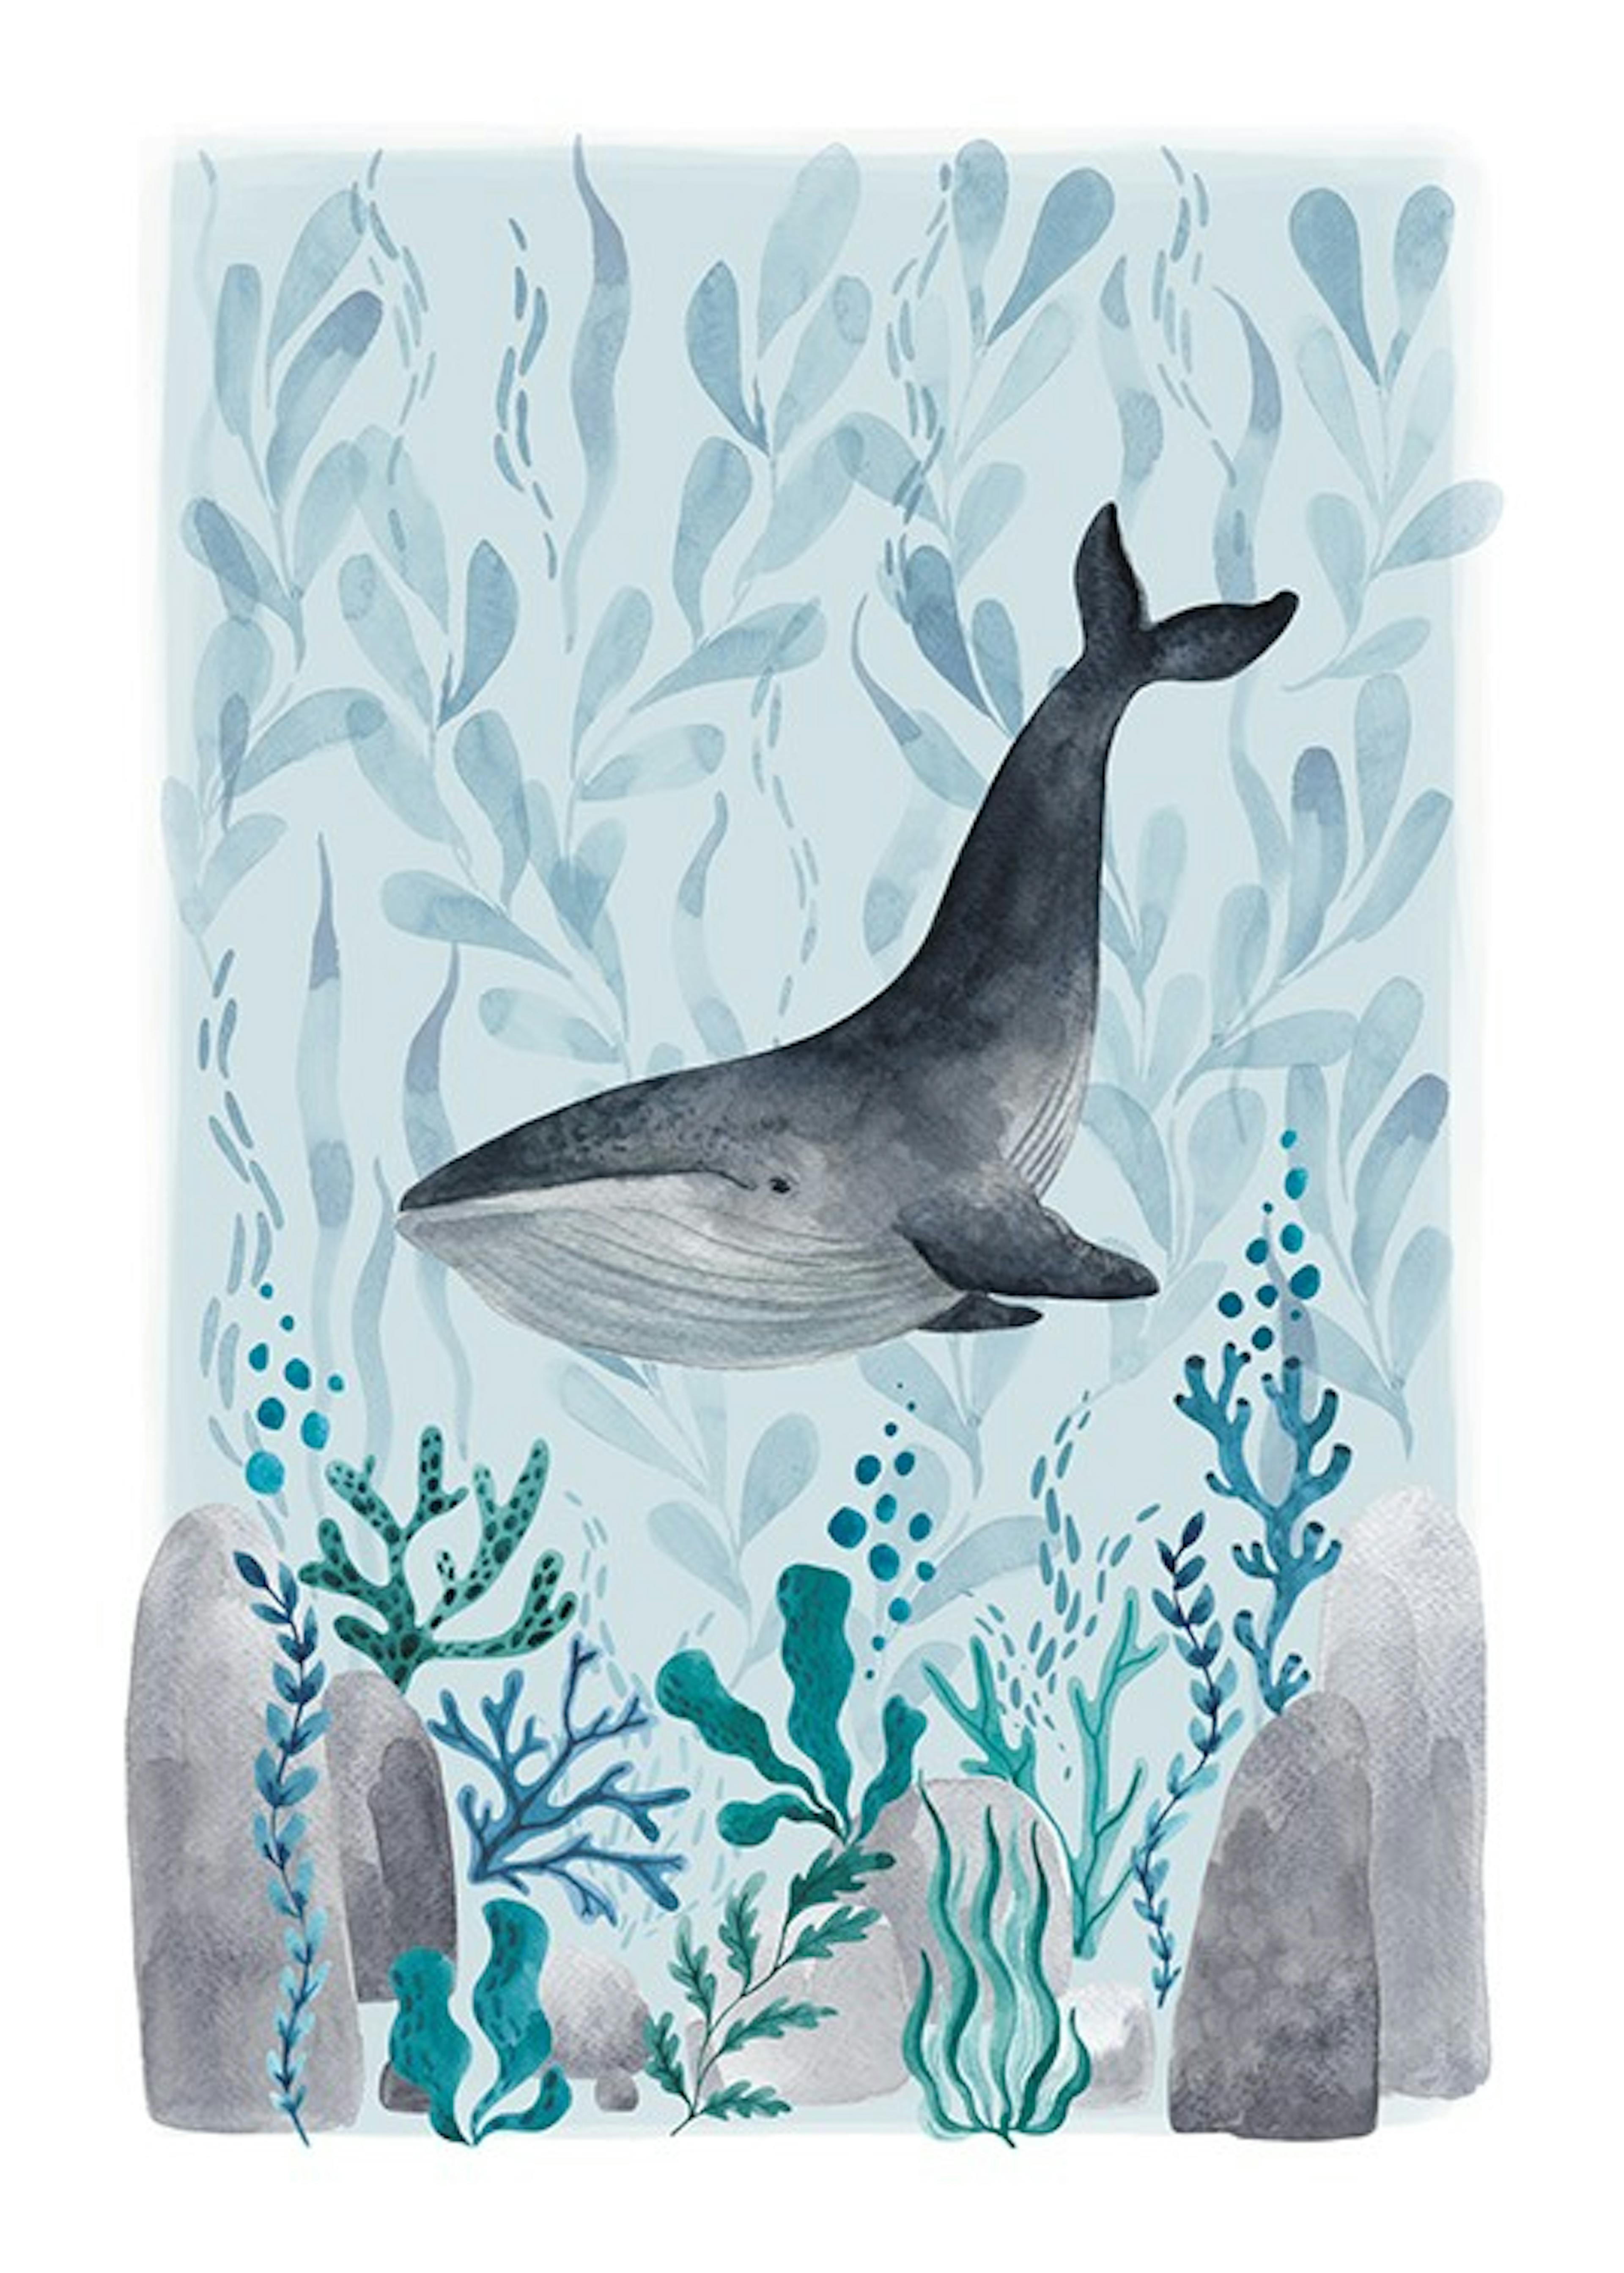 Ocean Whale Plakát 0